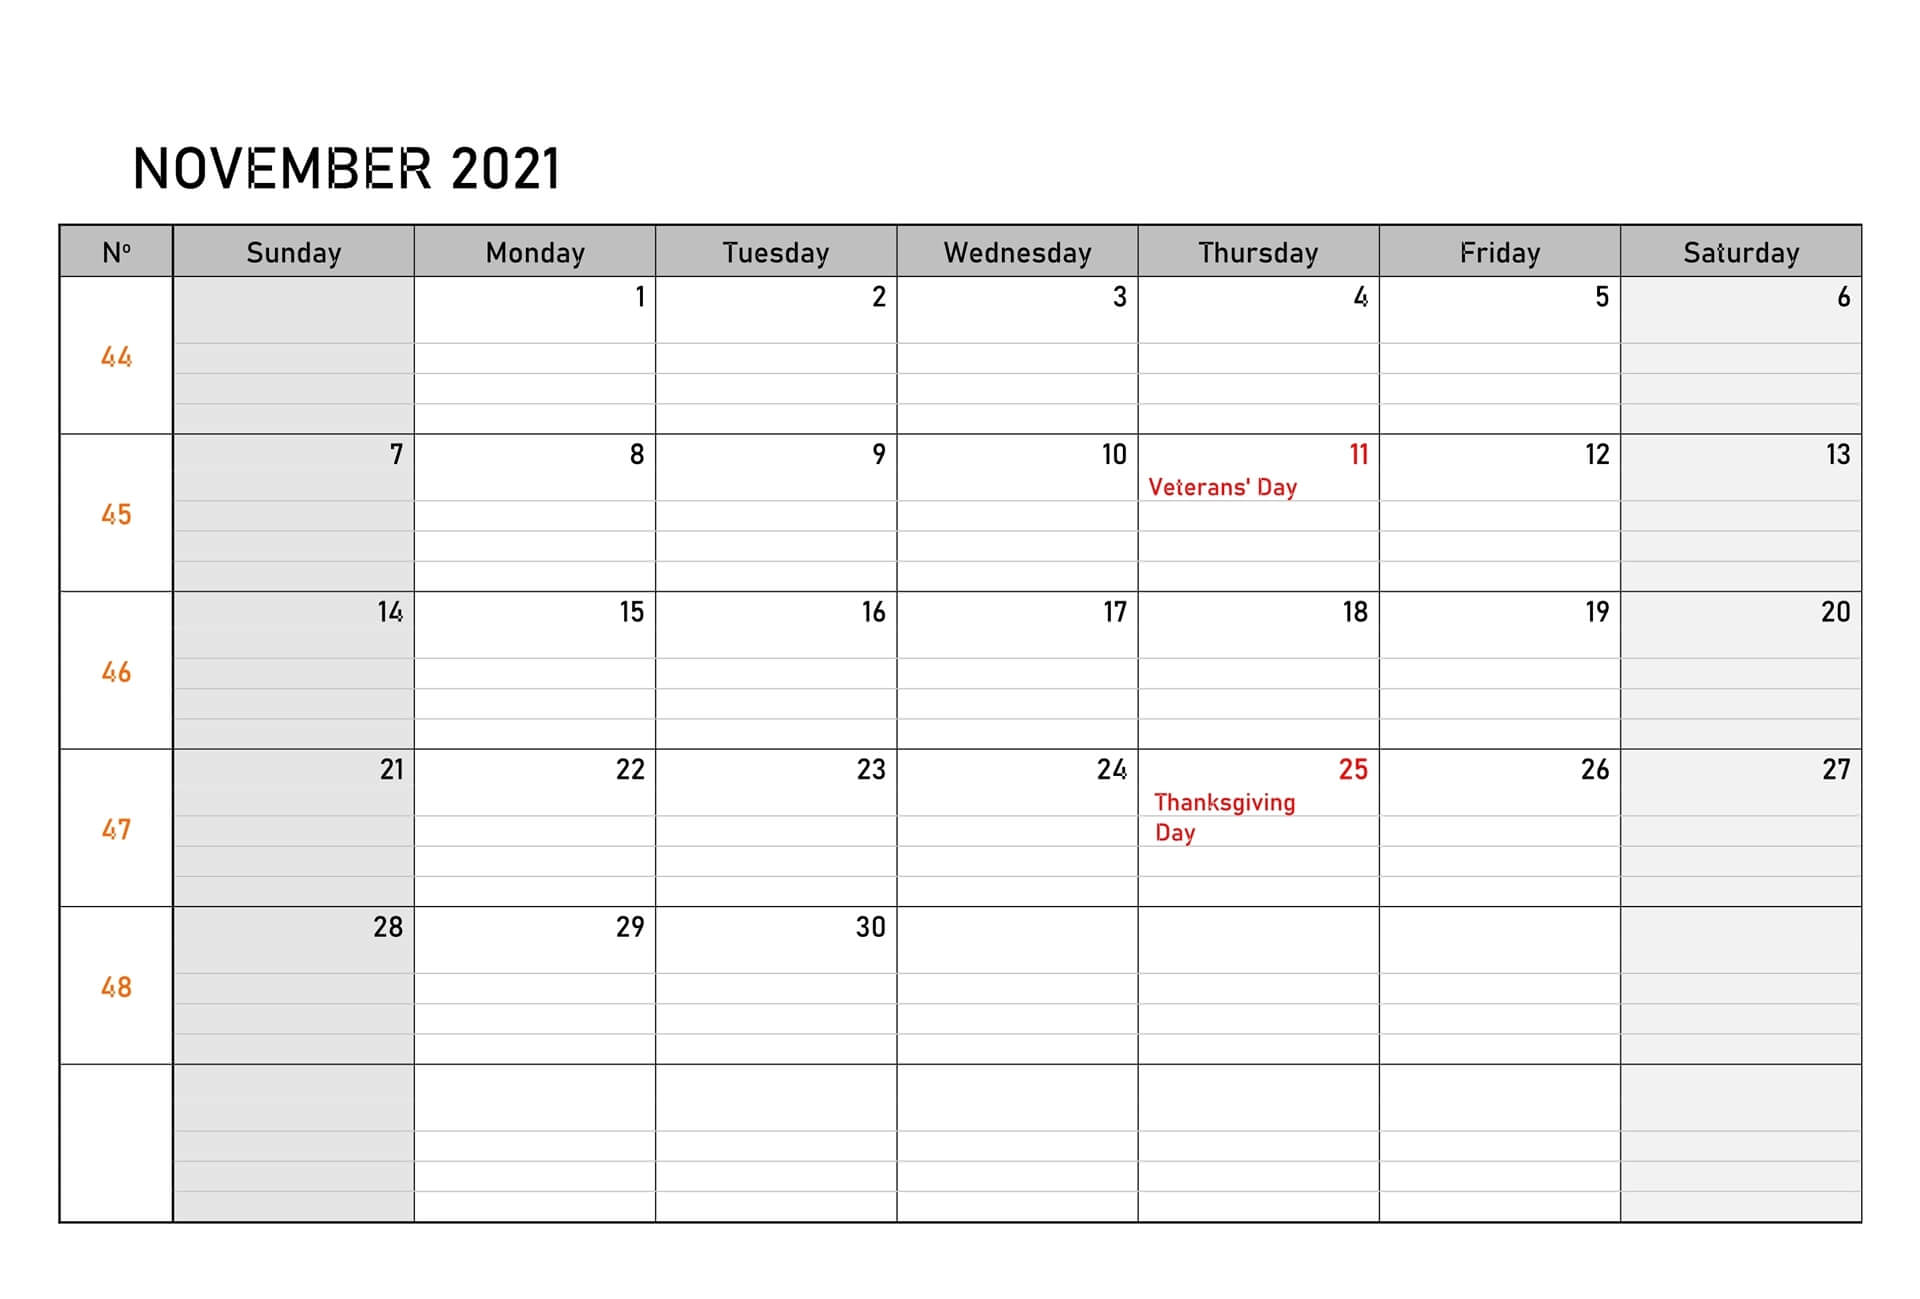 November 2021 Calendar With Holidays